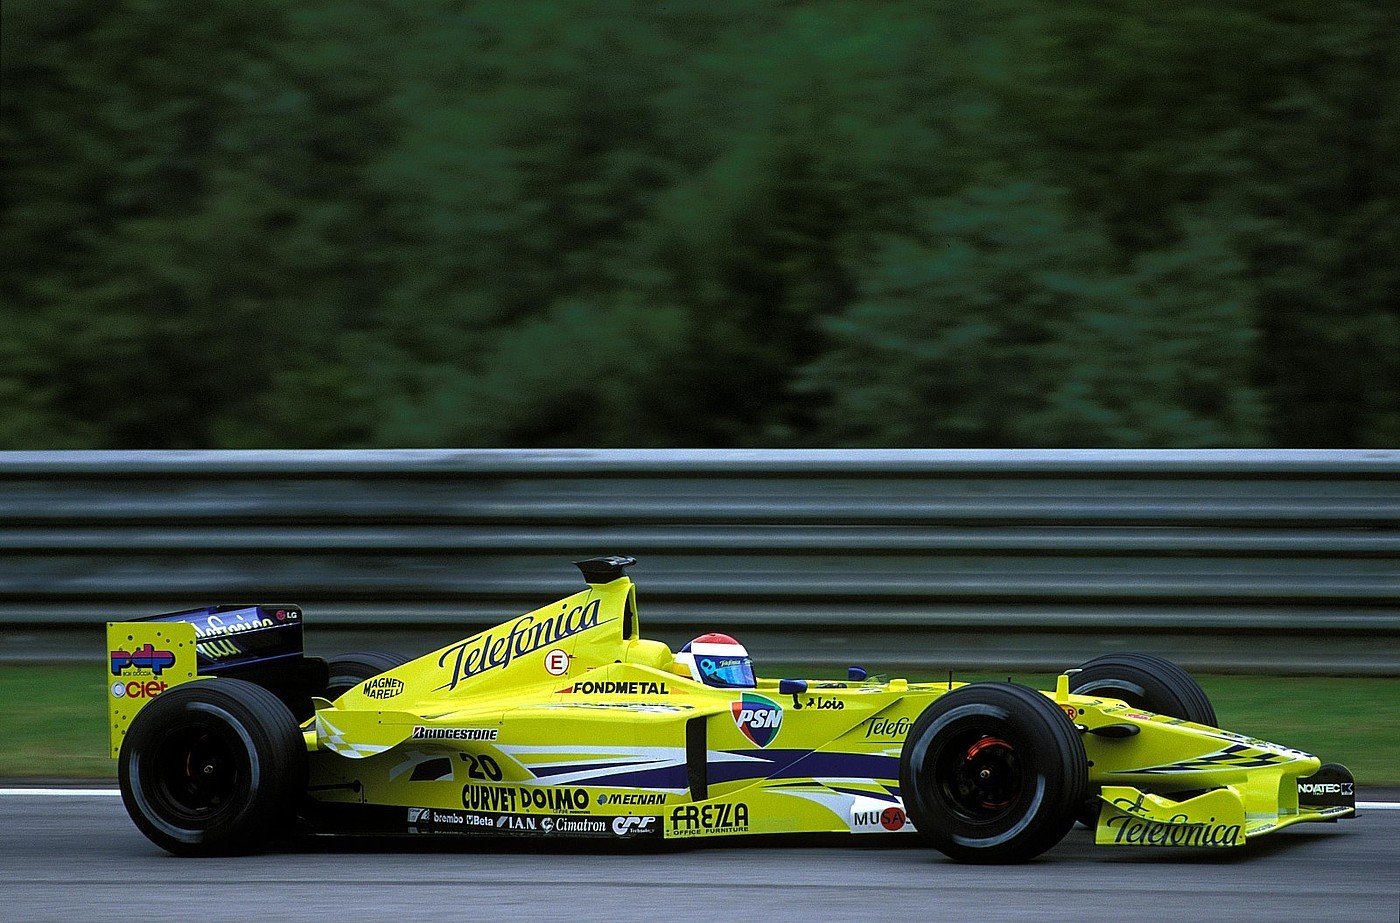 10 Austrian Grand Prix Austria A1-Ring, Spielberg minardi_m02.jpg